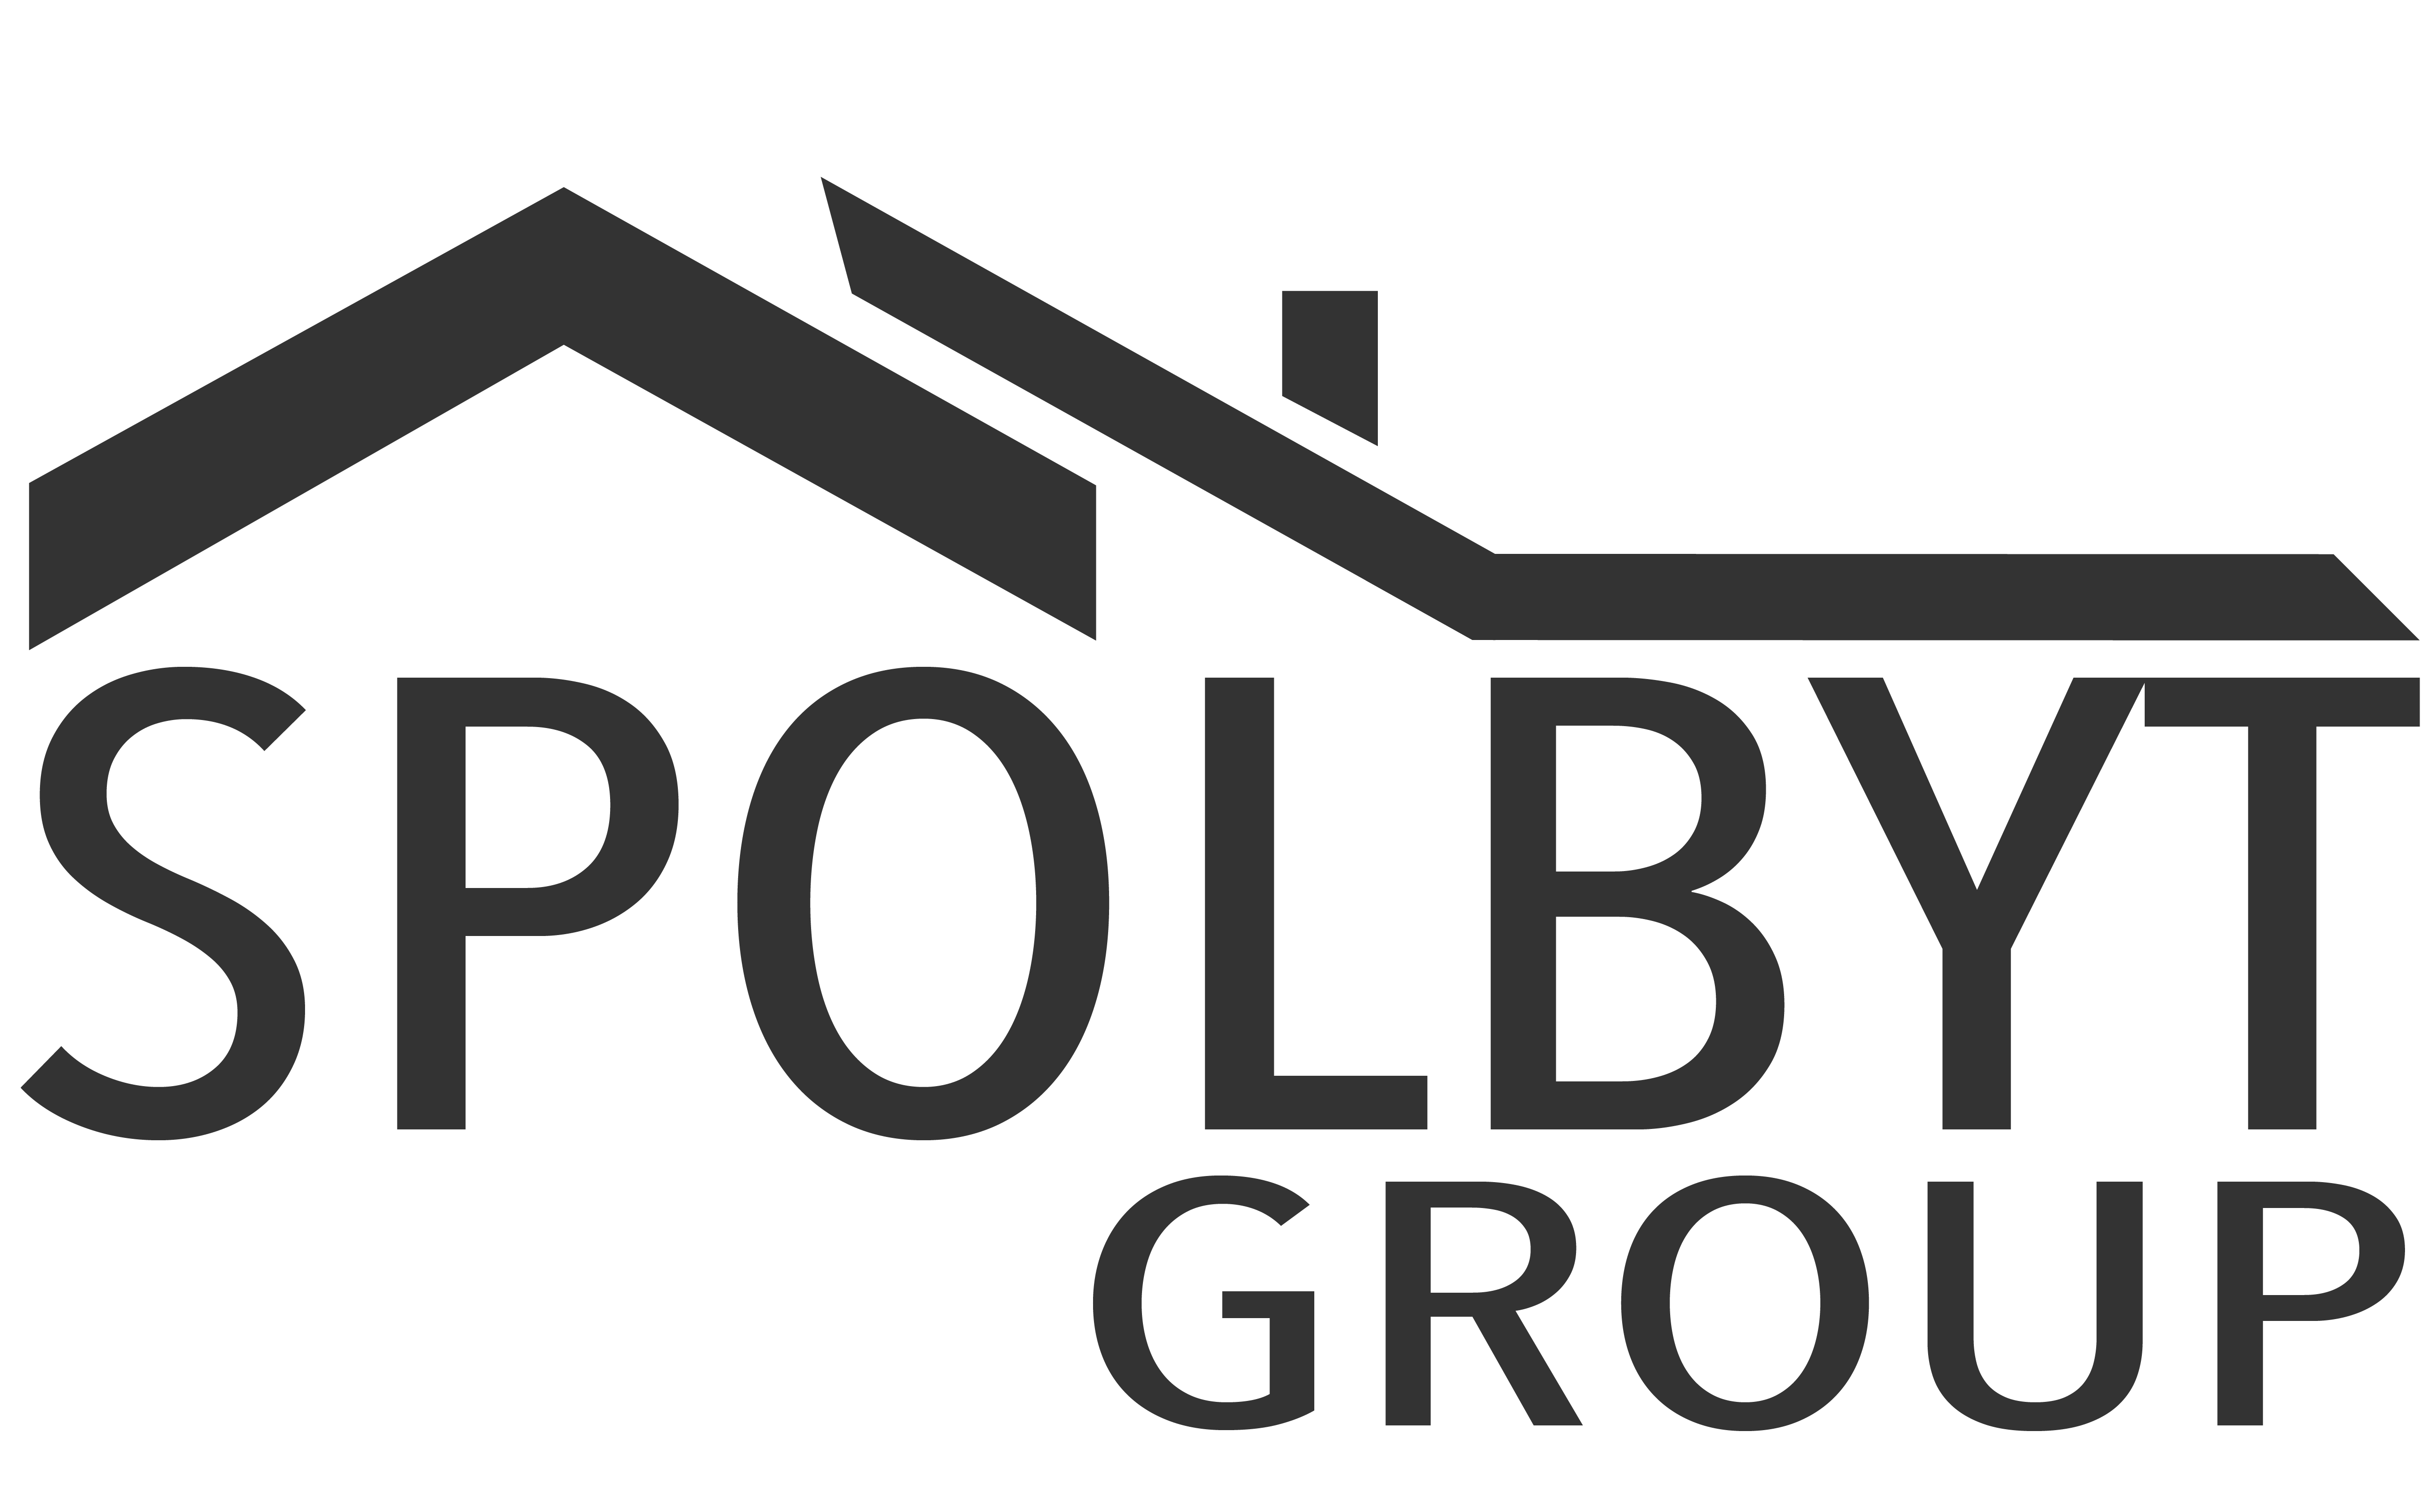 SPOLBYT Group logo